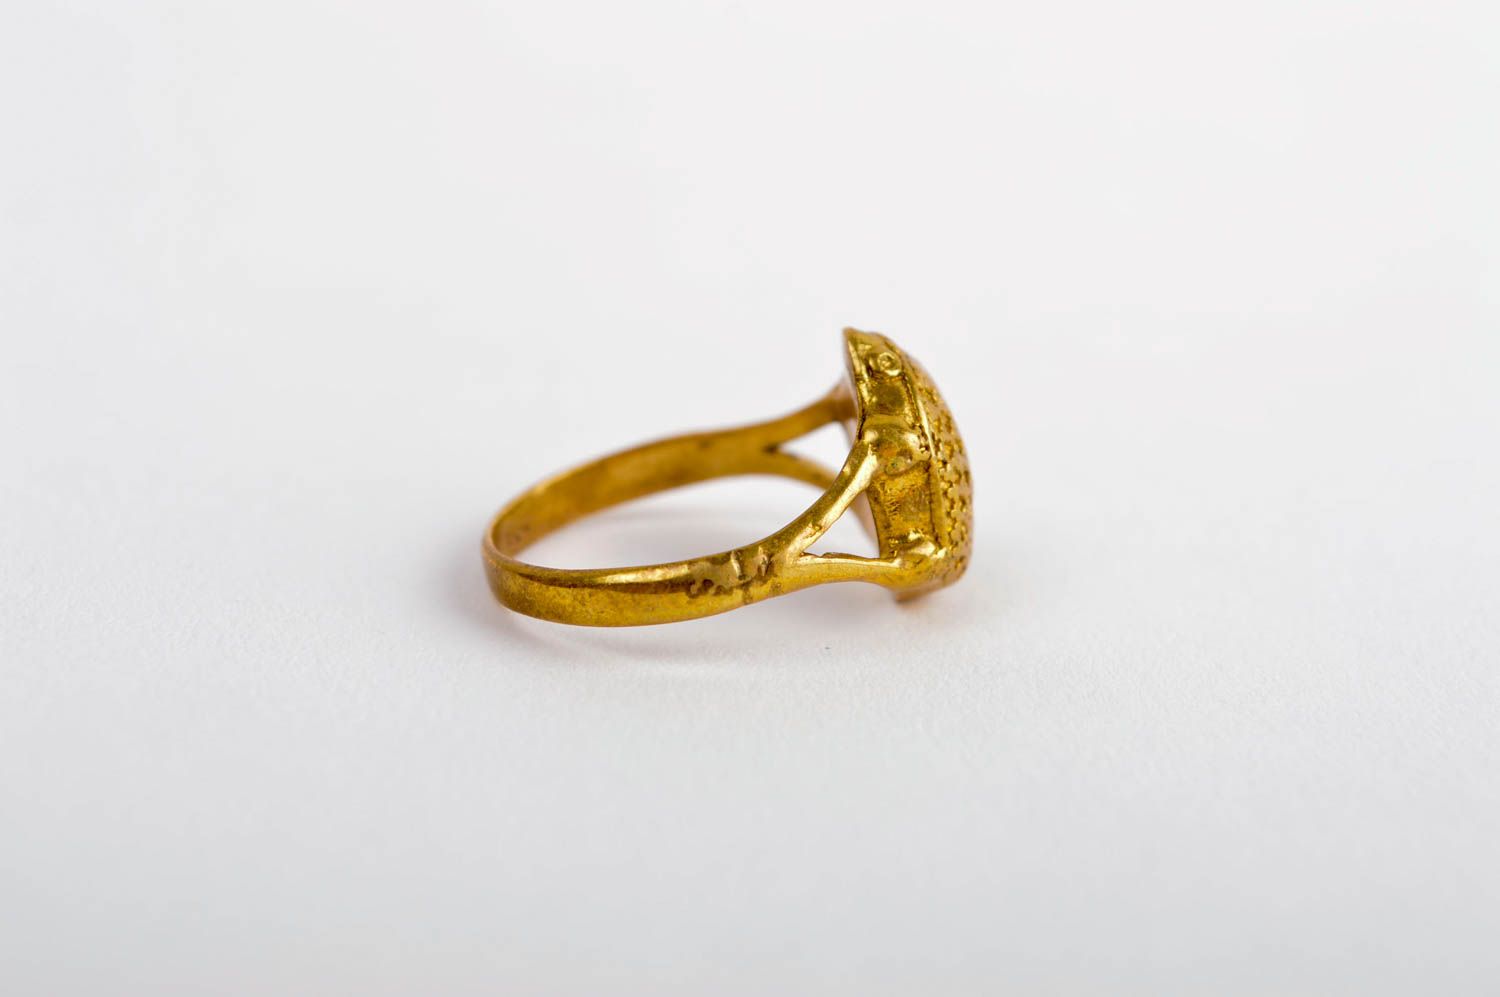 Stylish handmade metal ring beautiful jewellery cool jewelry designs gift ideas photo 3